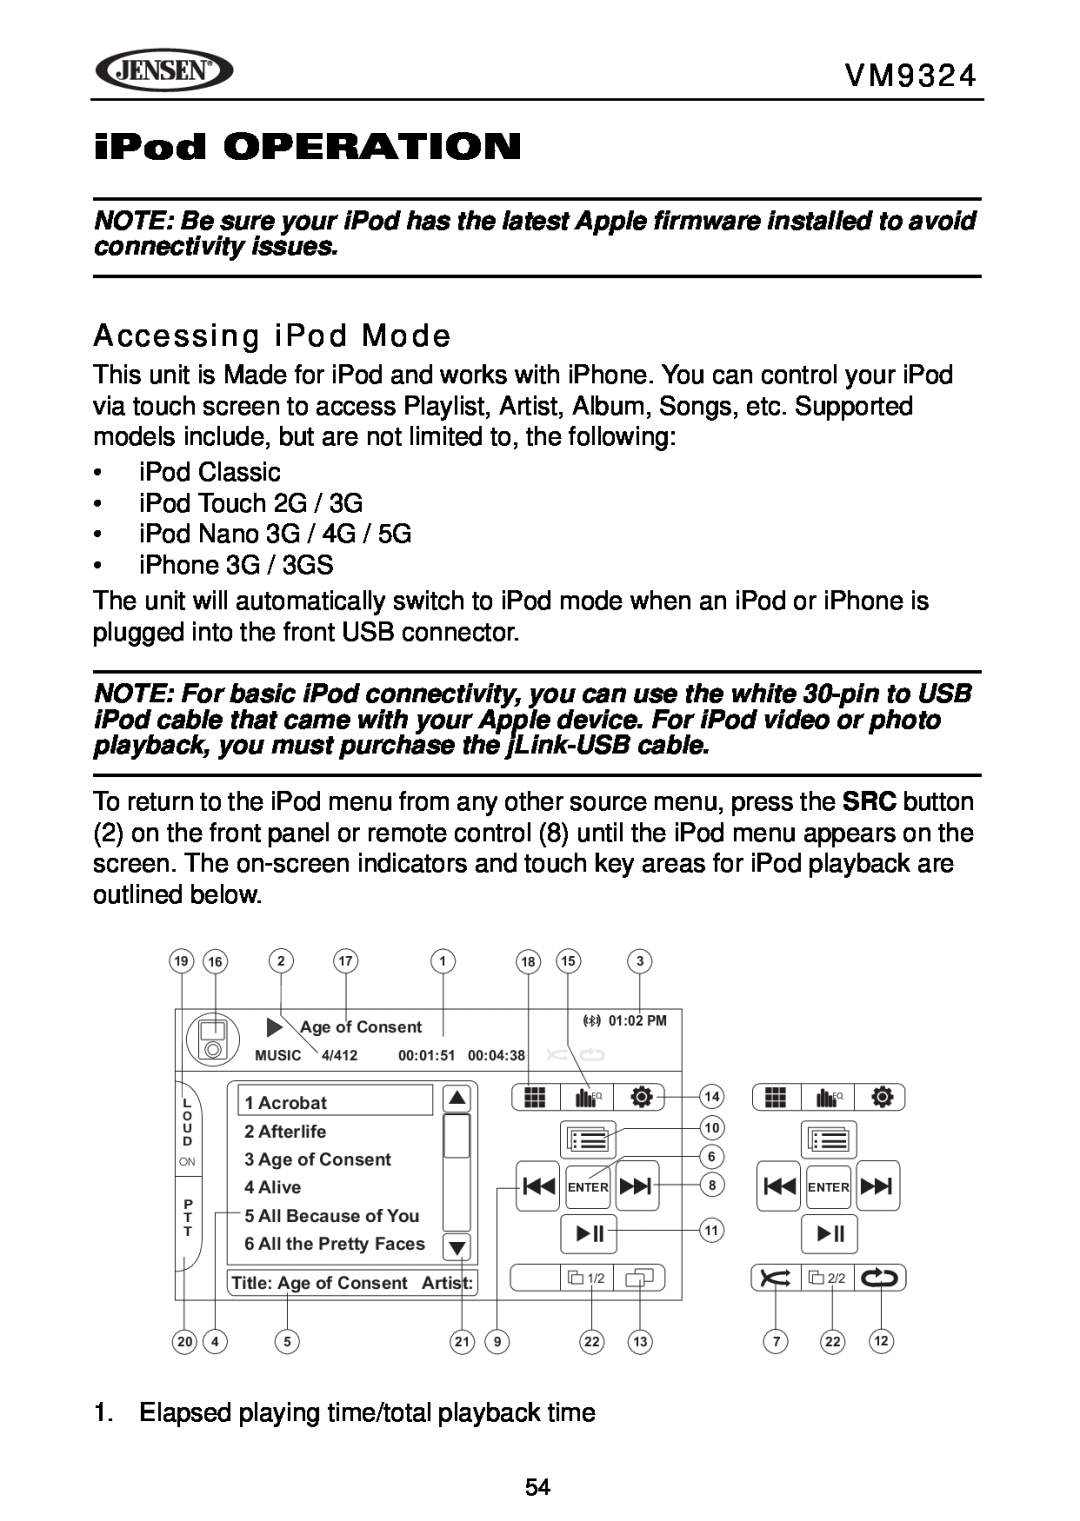 Jensen VM9324 manual iPod OPERATION, Accessing iPod Mode 